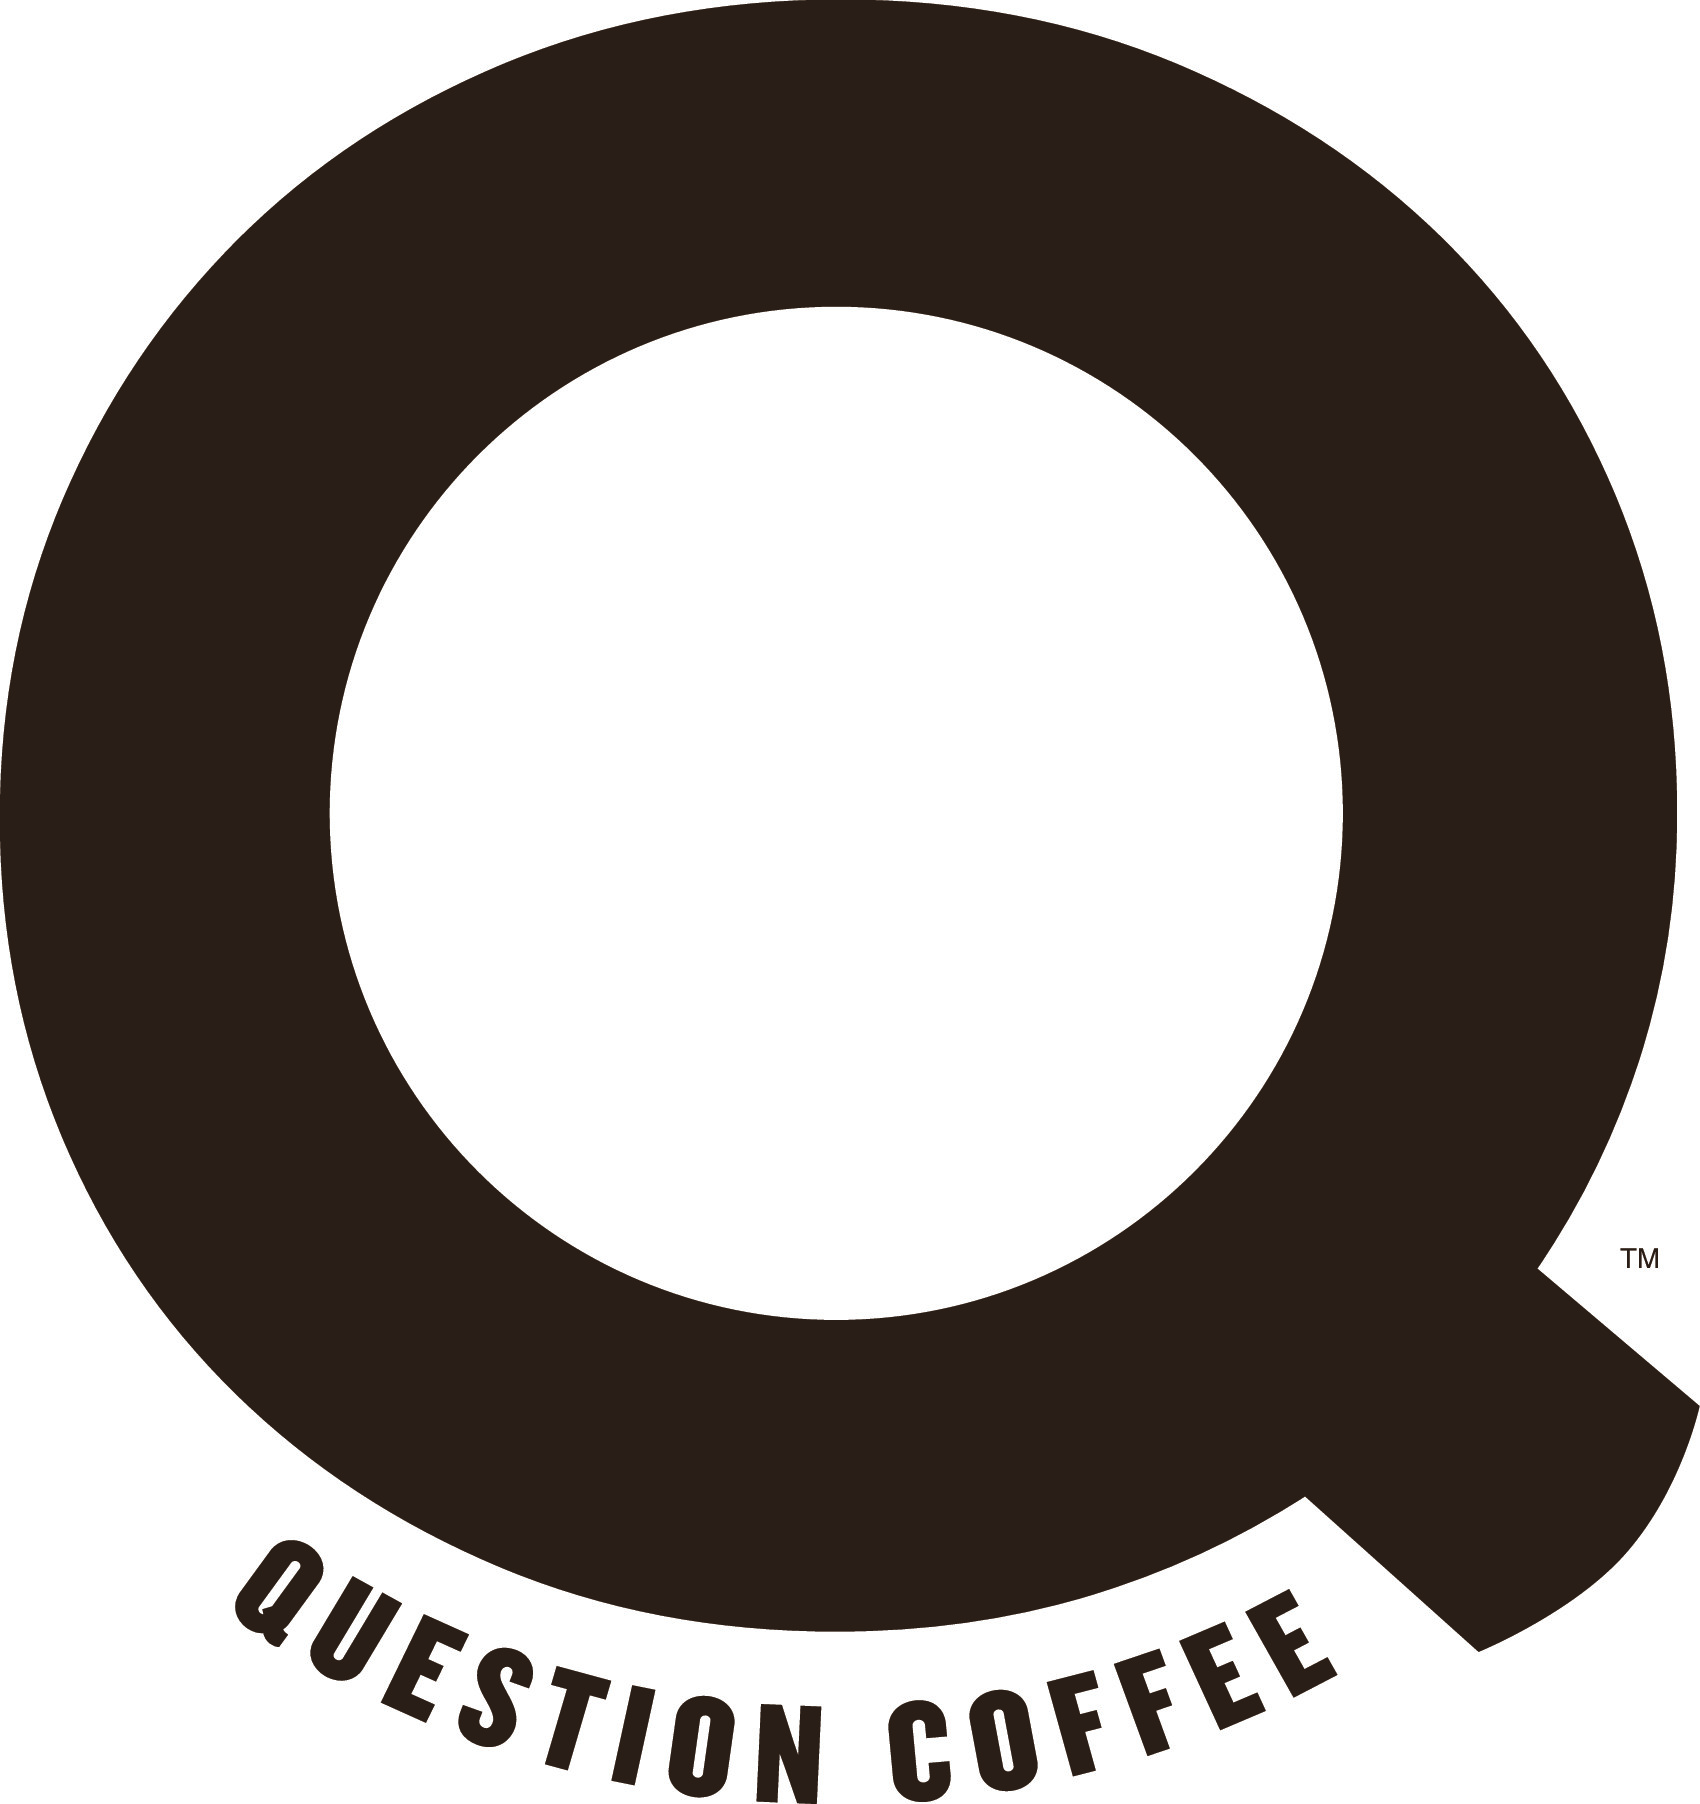 Question Coffee logo brown.jpg